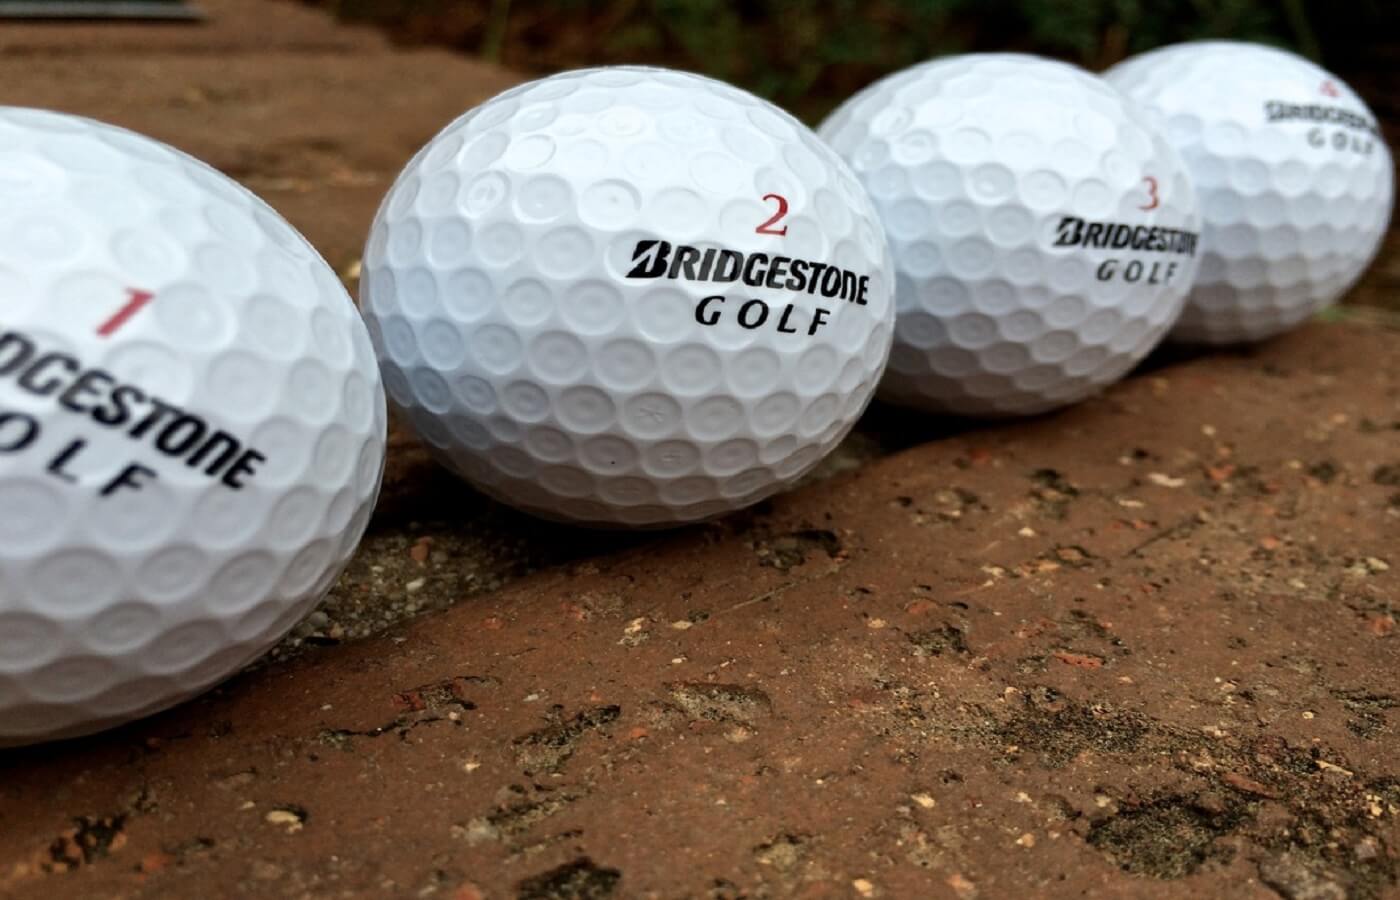 Bridgestone golf balls lined up